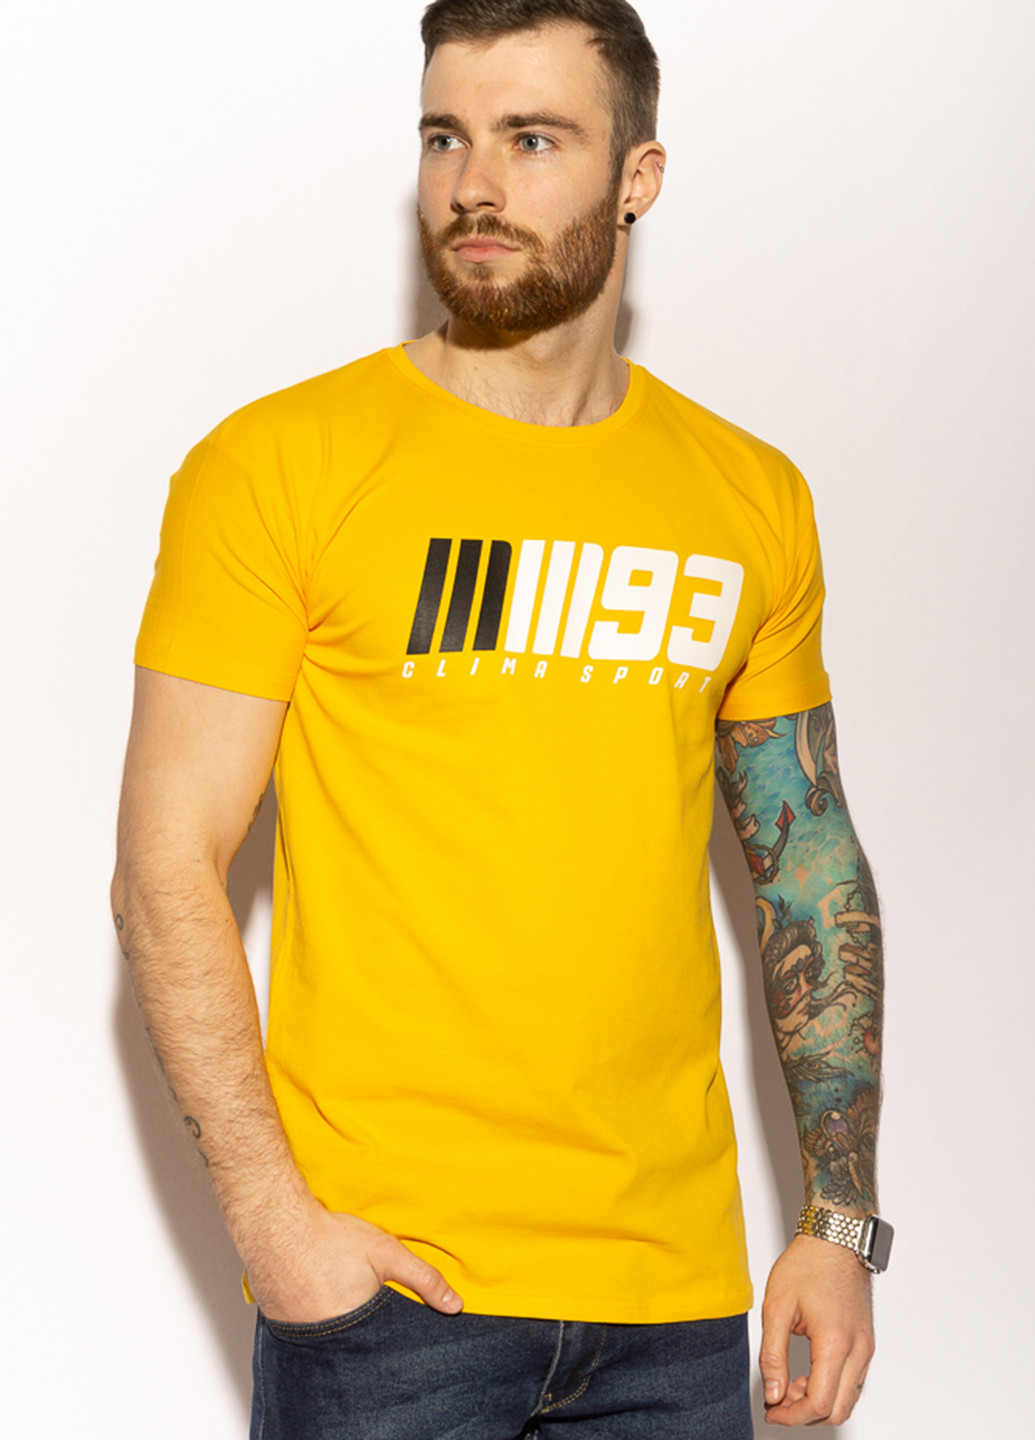 Жовта футболка Time of Style